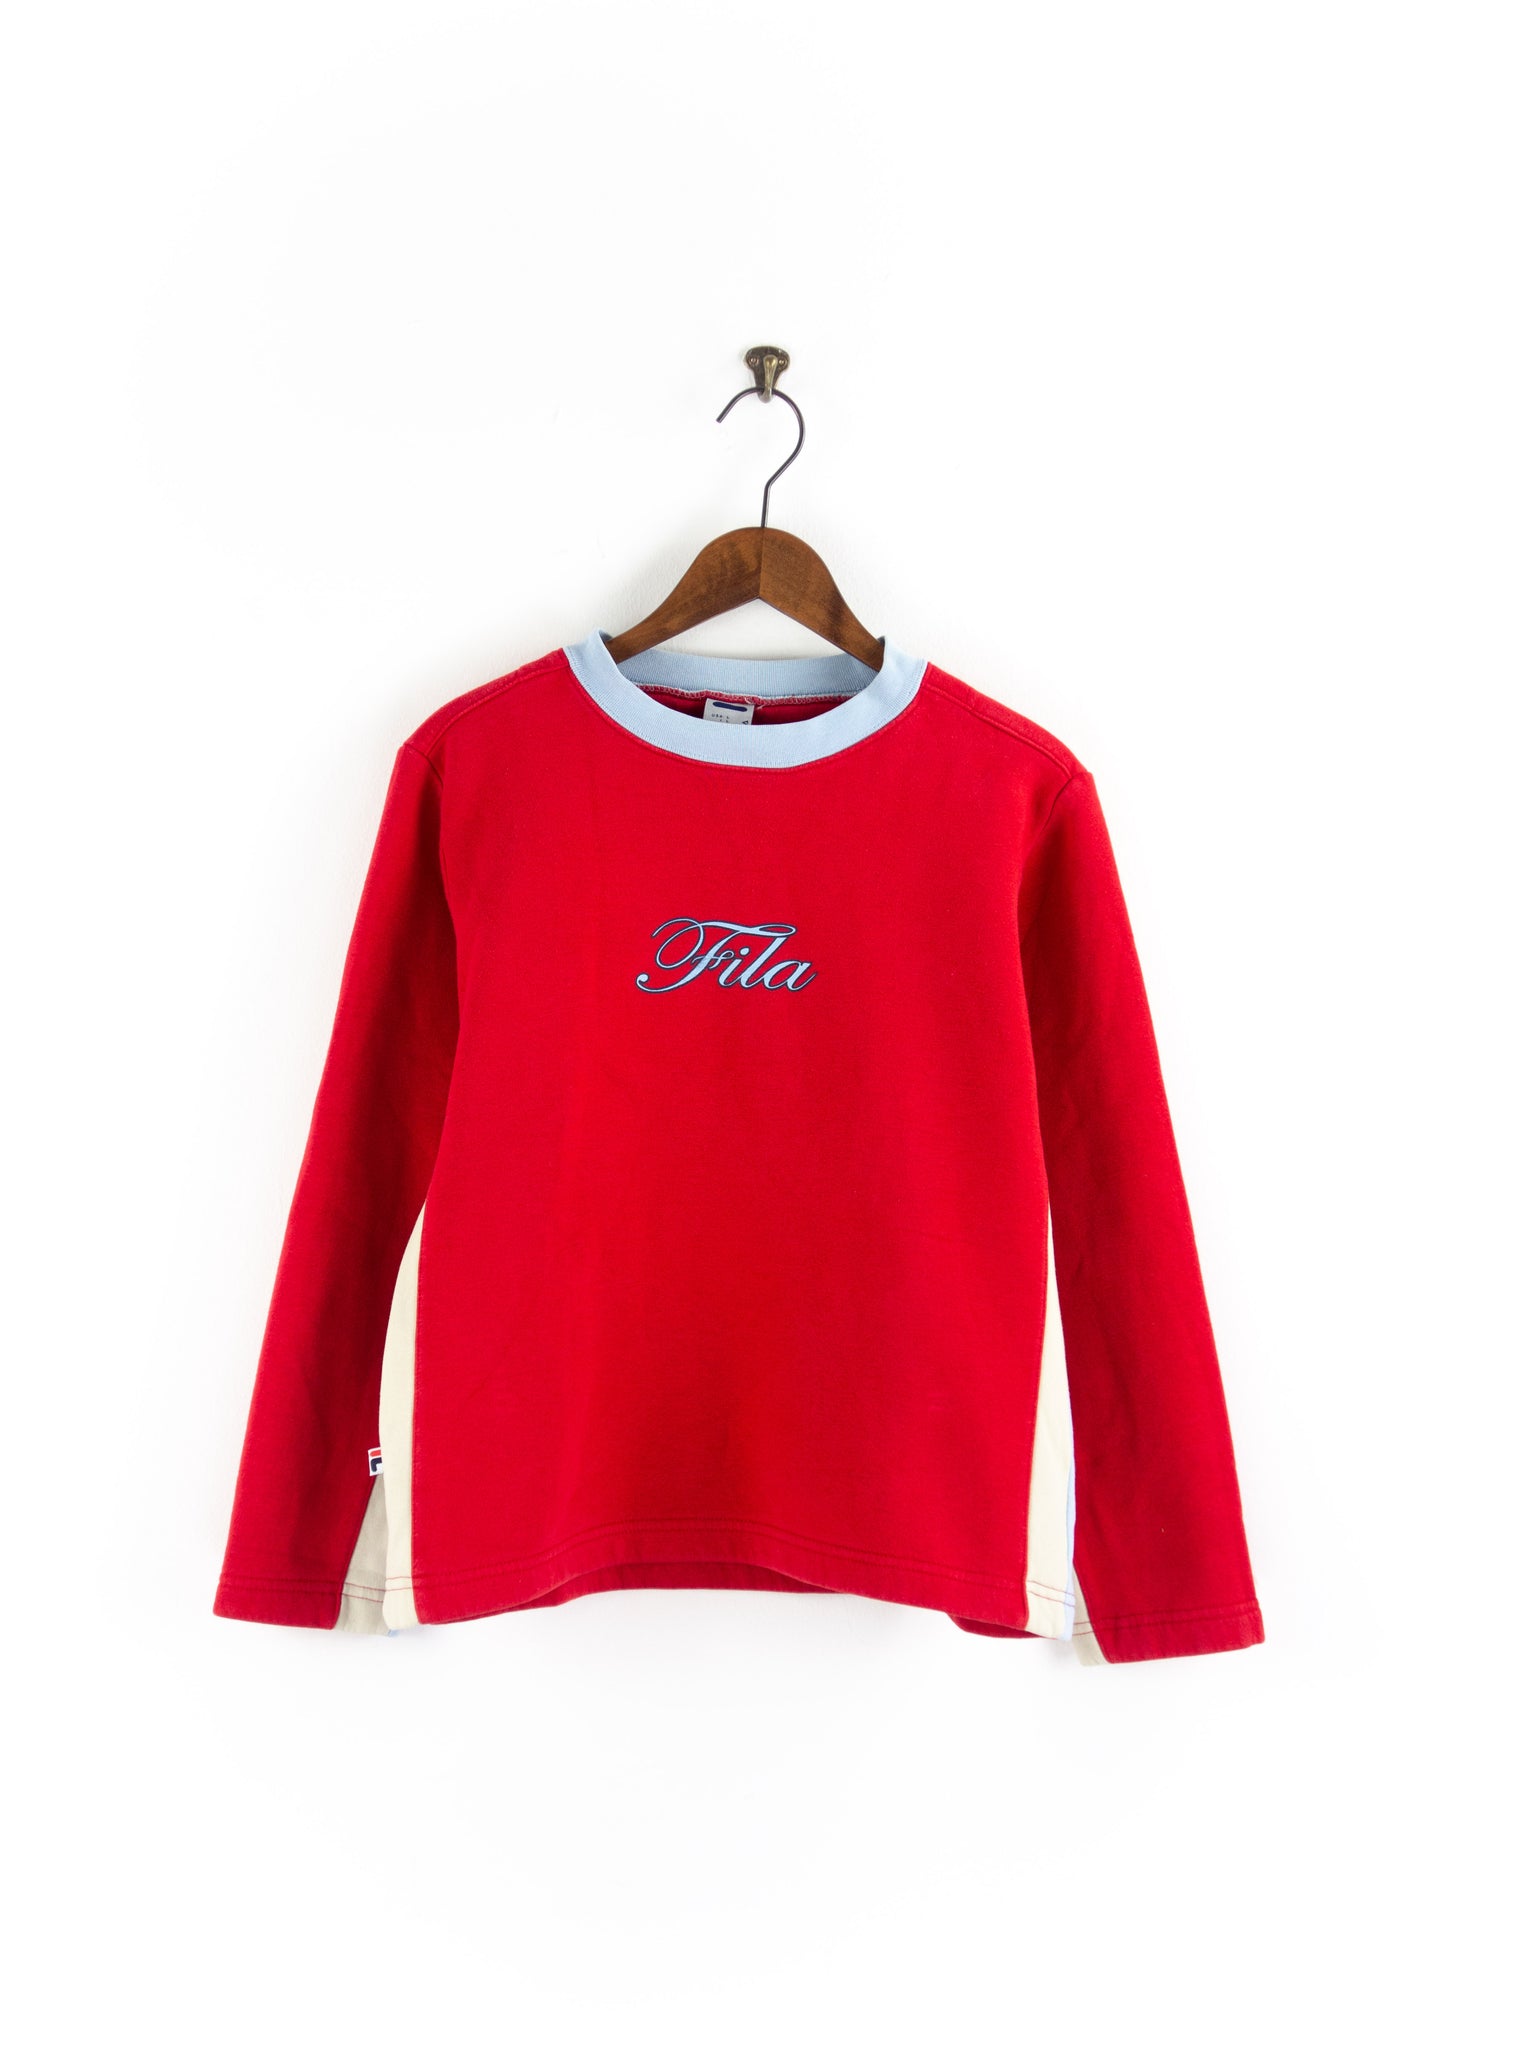 Fila Sweater S/M